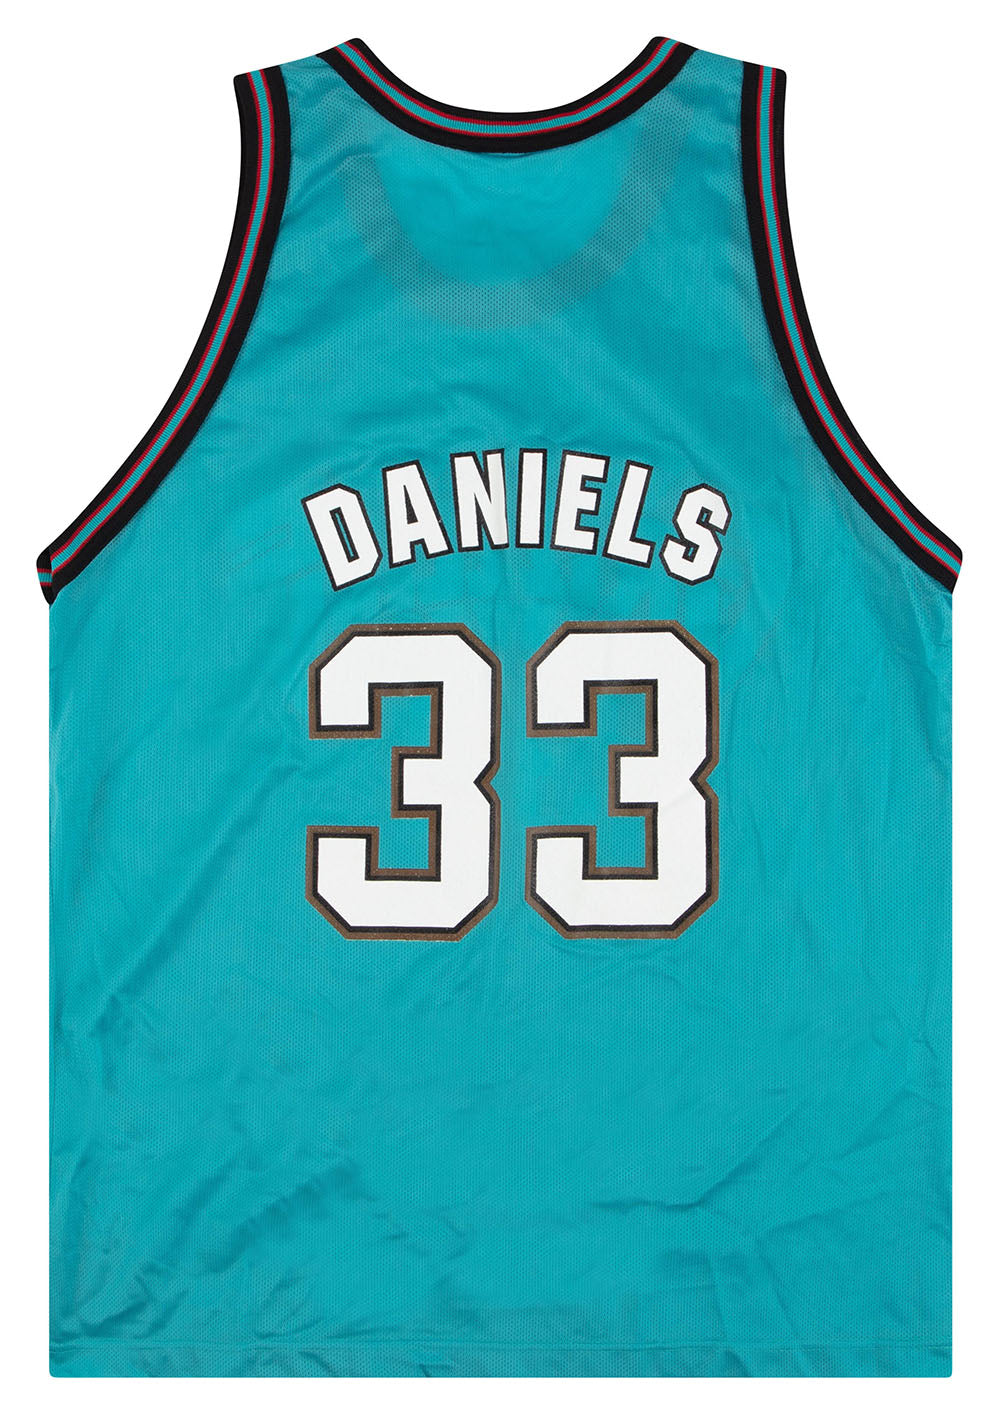 1997-98 VANCOUVER GRIZZLIES DANIELS #33 CHAMPION JERSEY (AWAY) XL